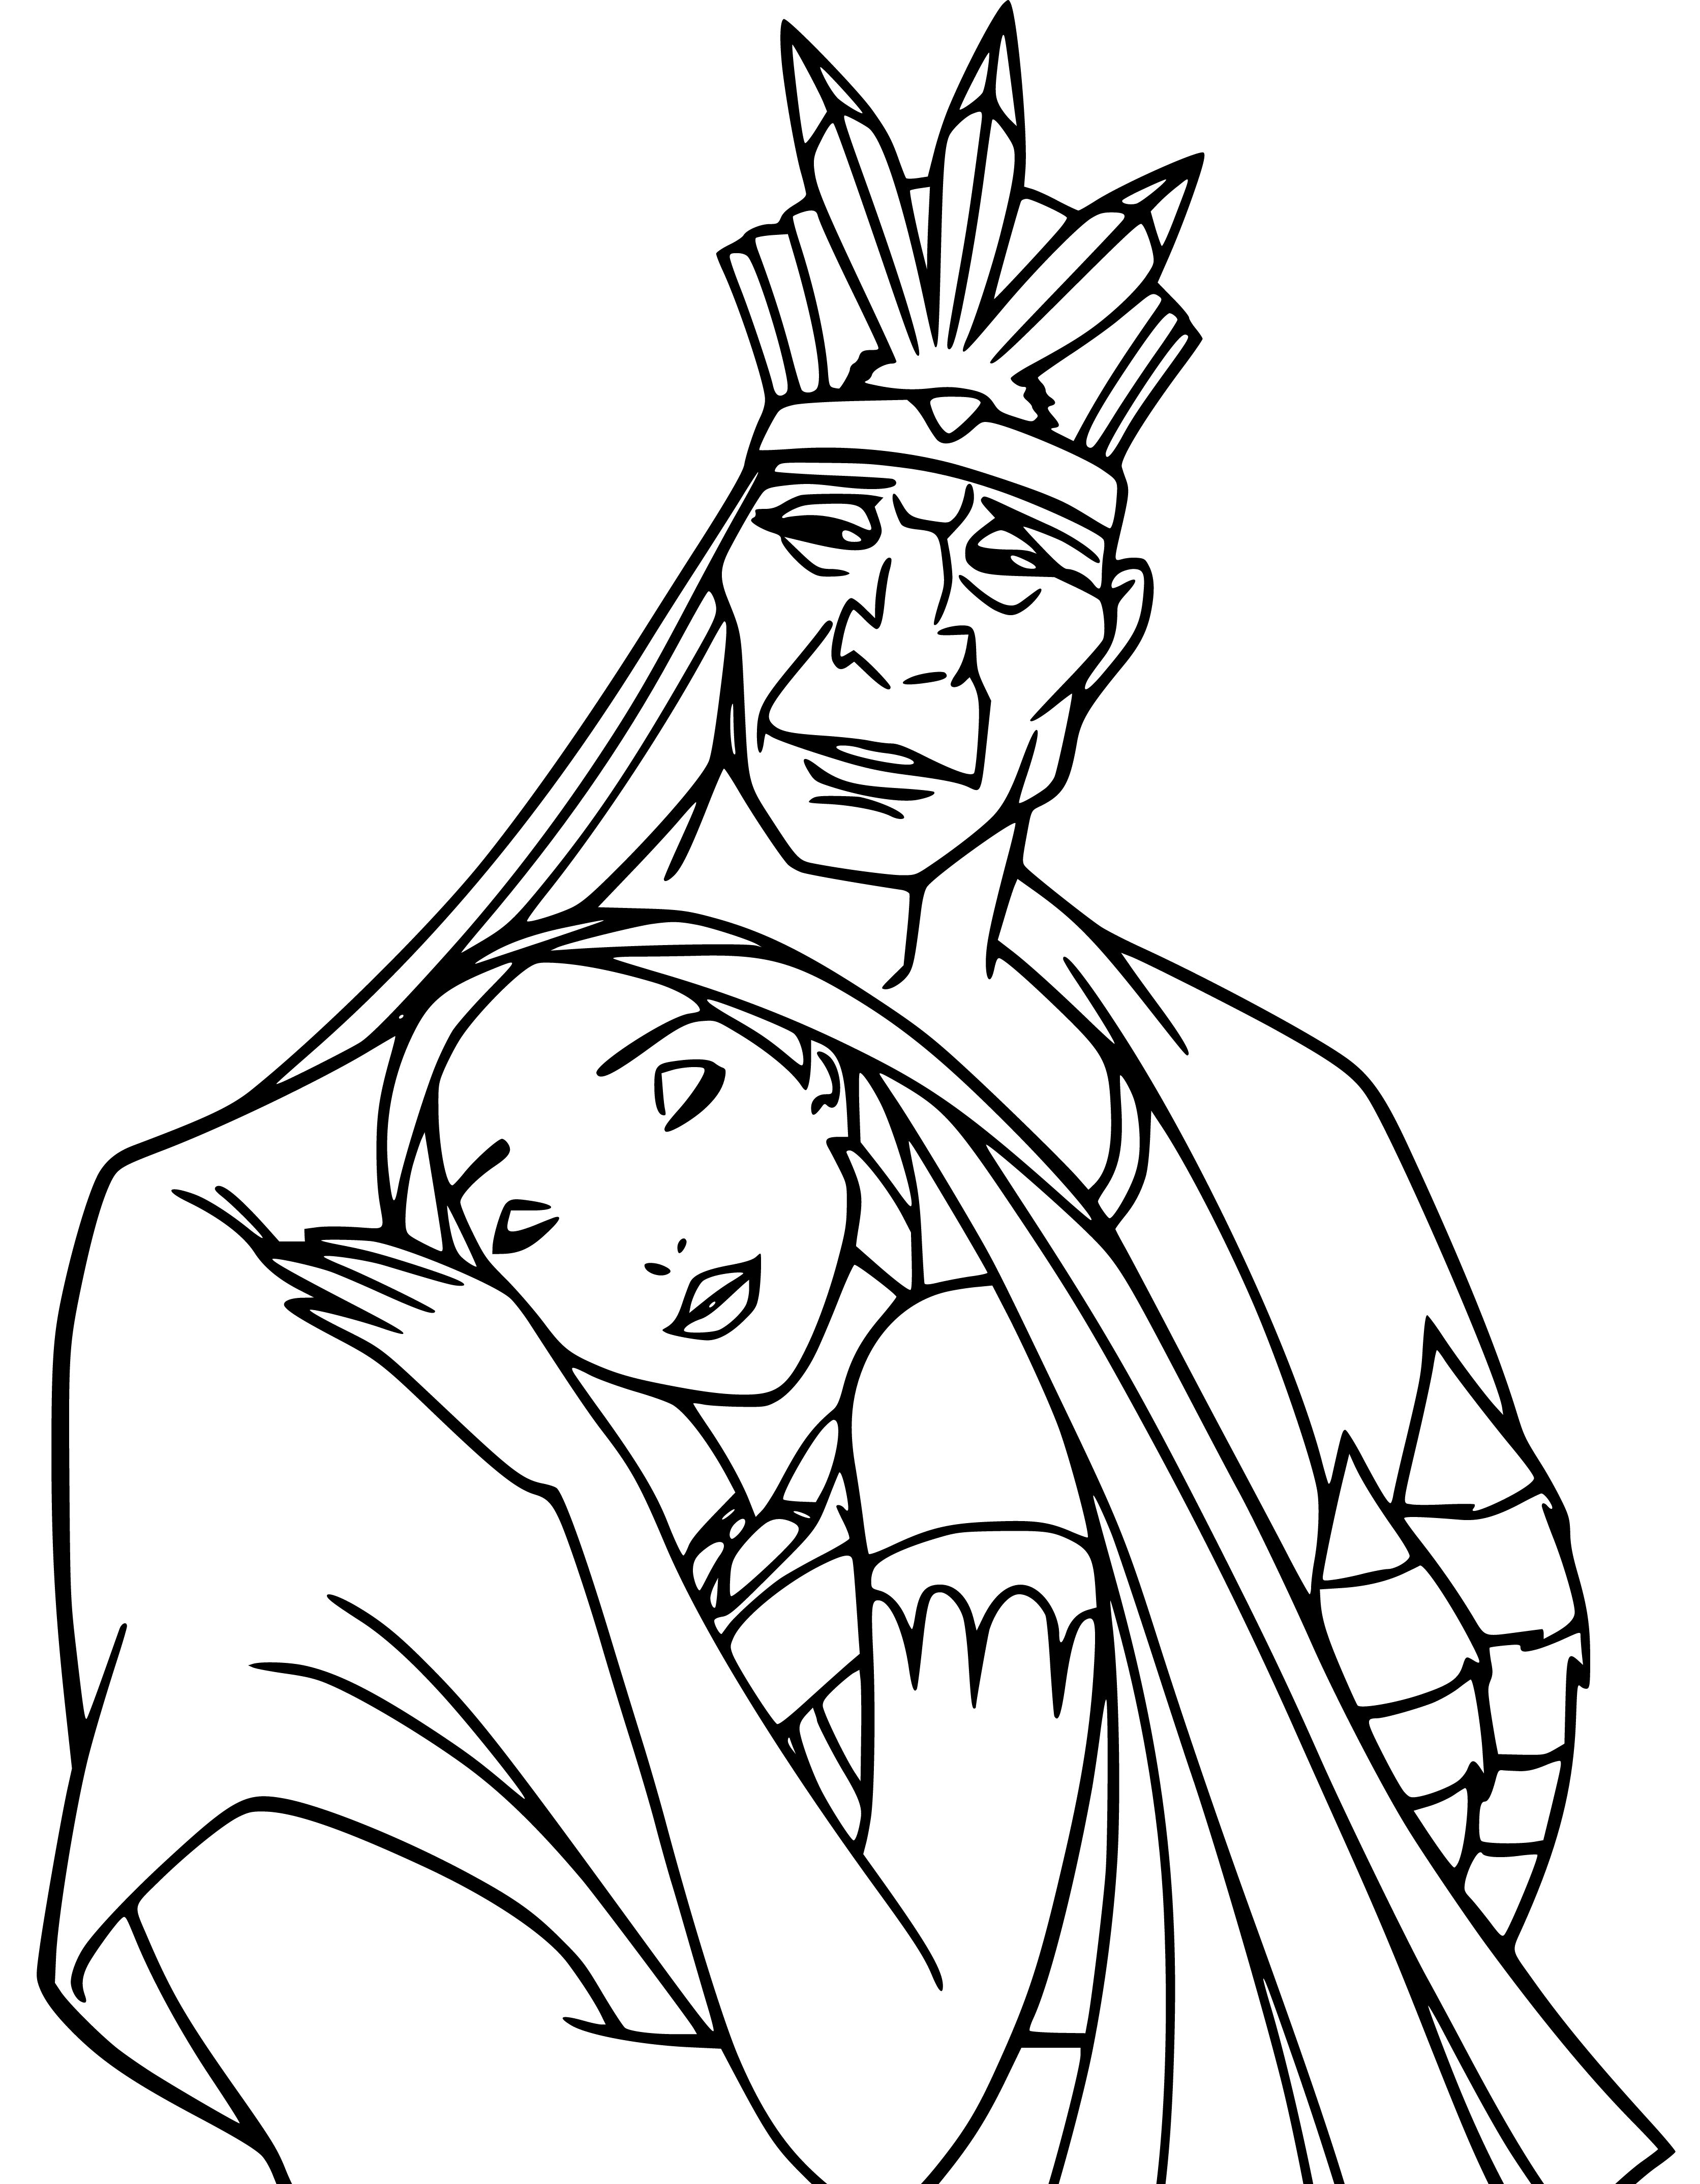 Printable Chief Powhatan and Pocahontas Coloring Page for kids.